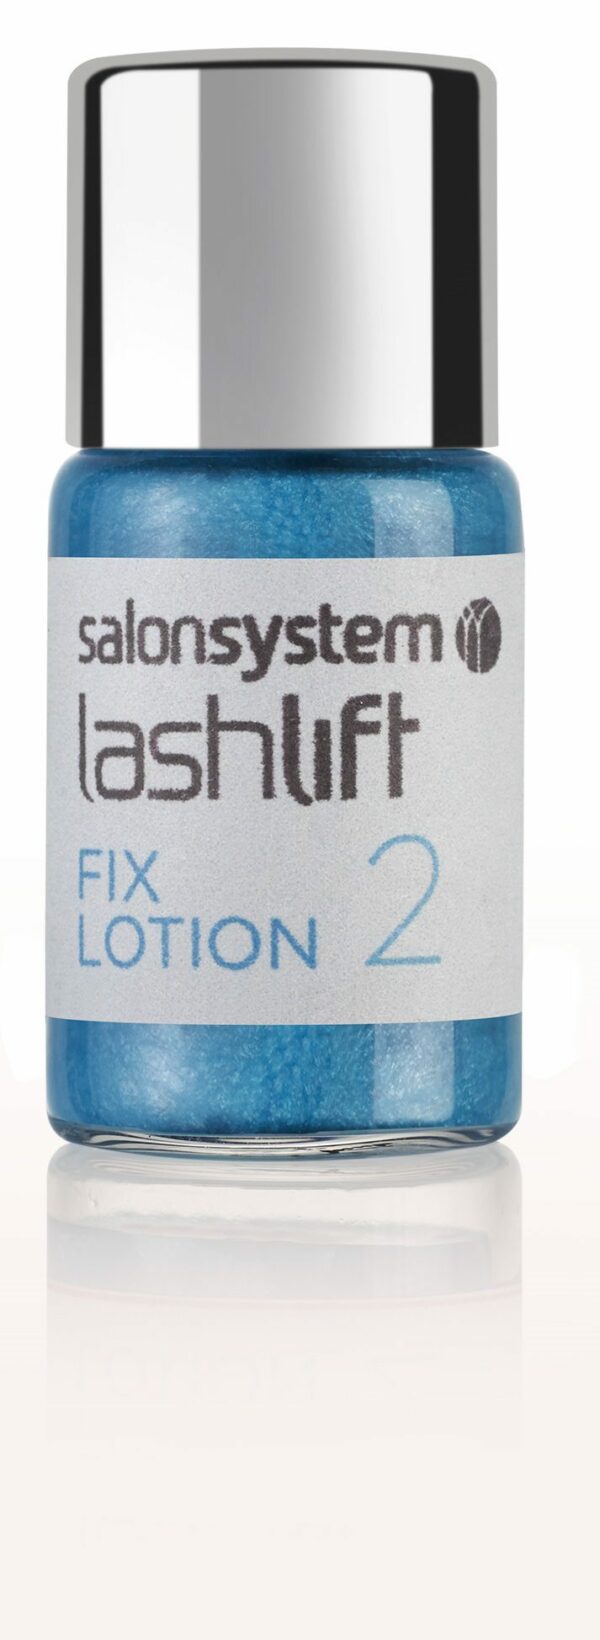 Lashlift Fix Lotion bottle